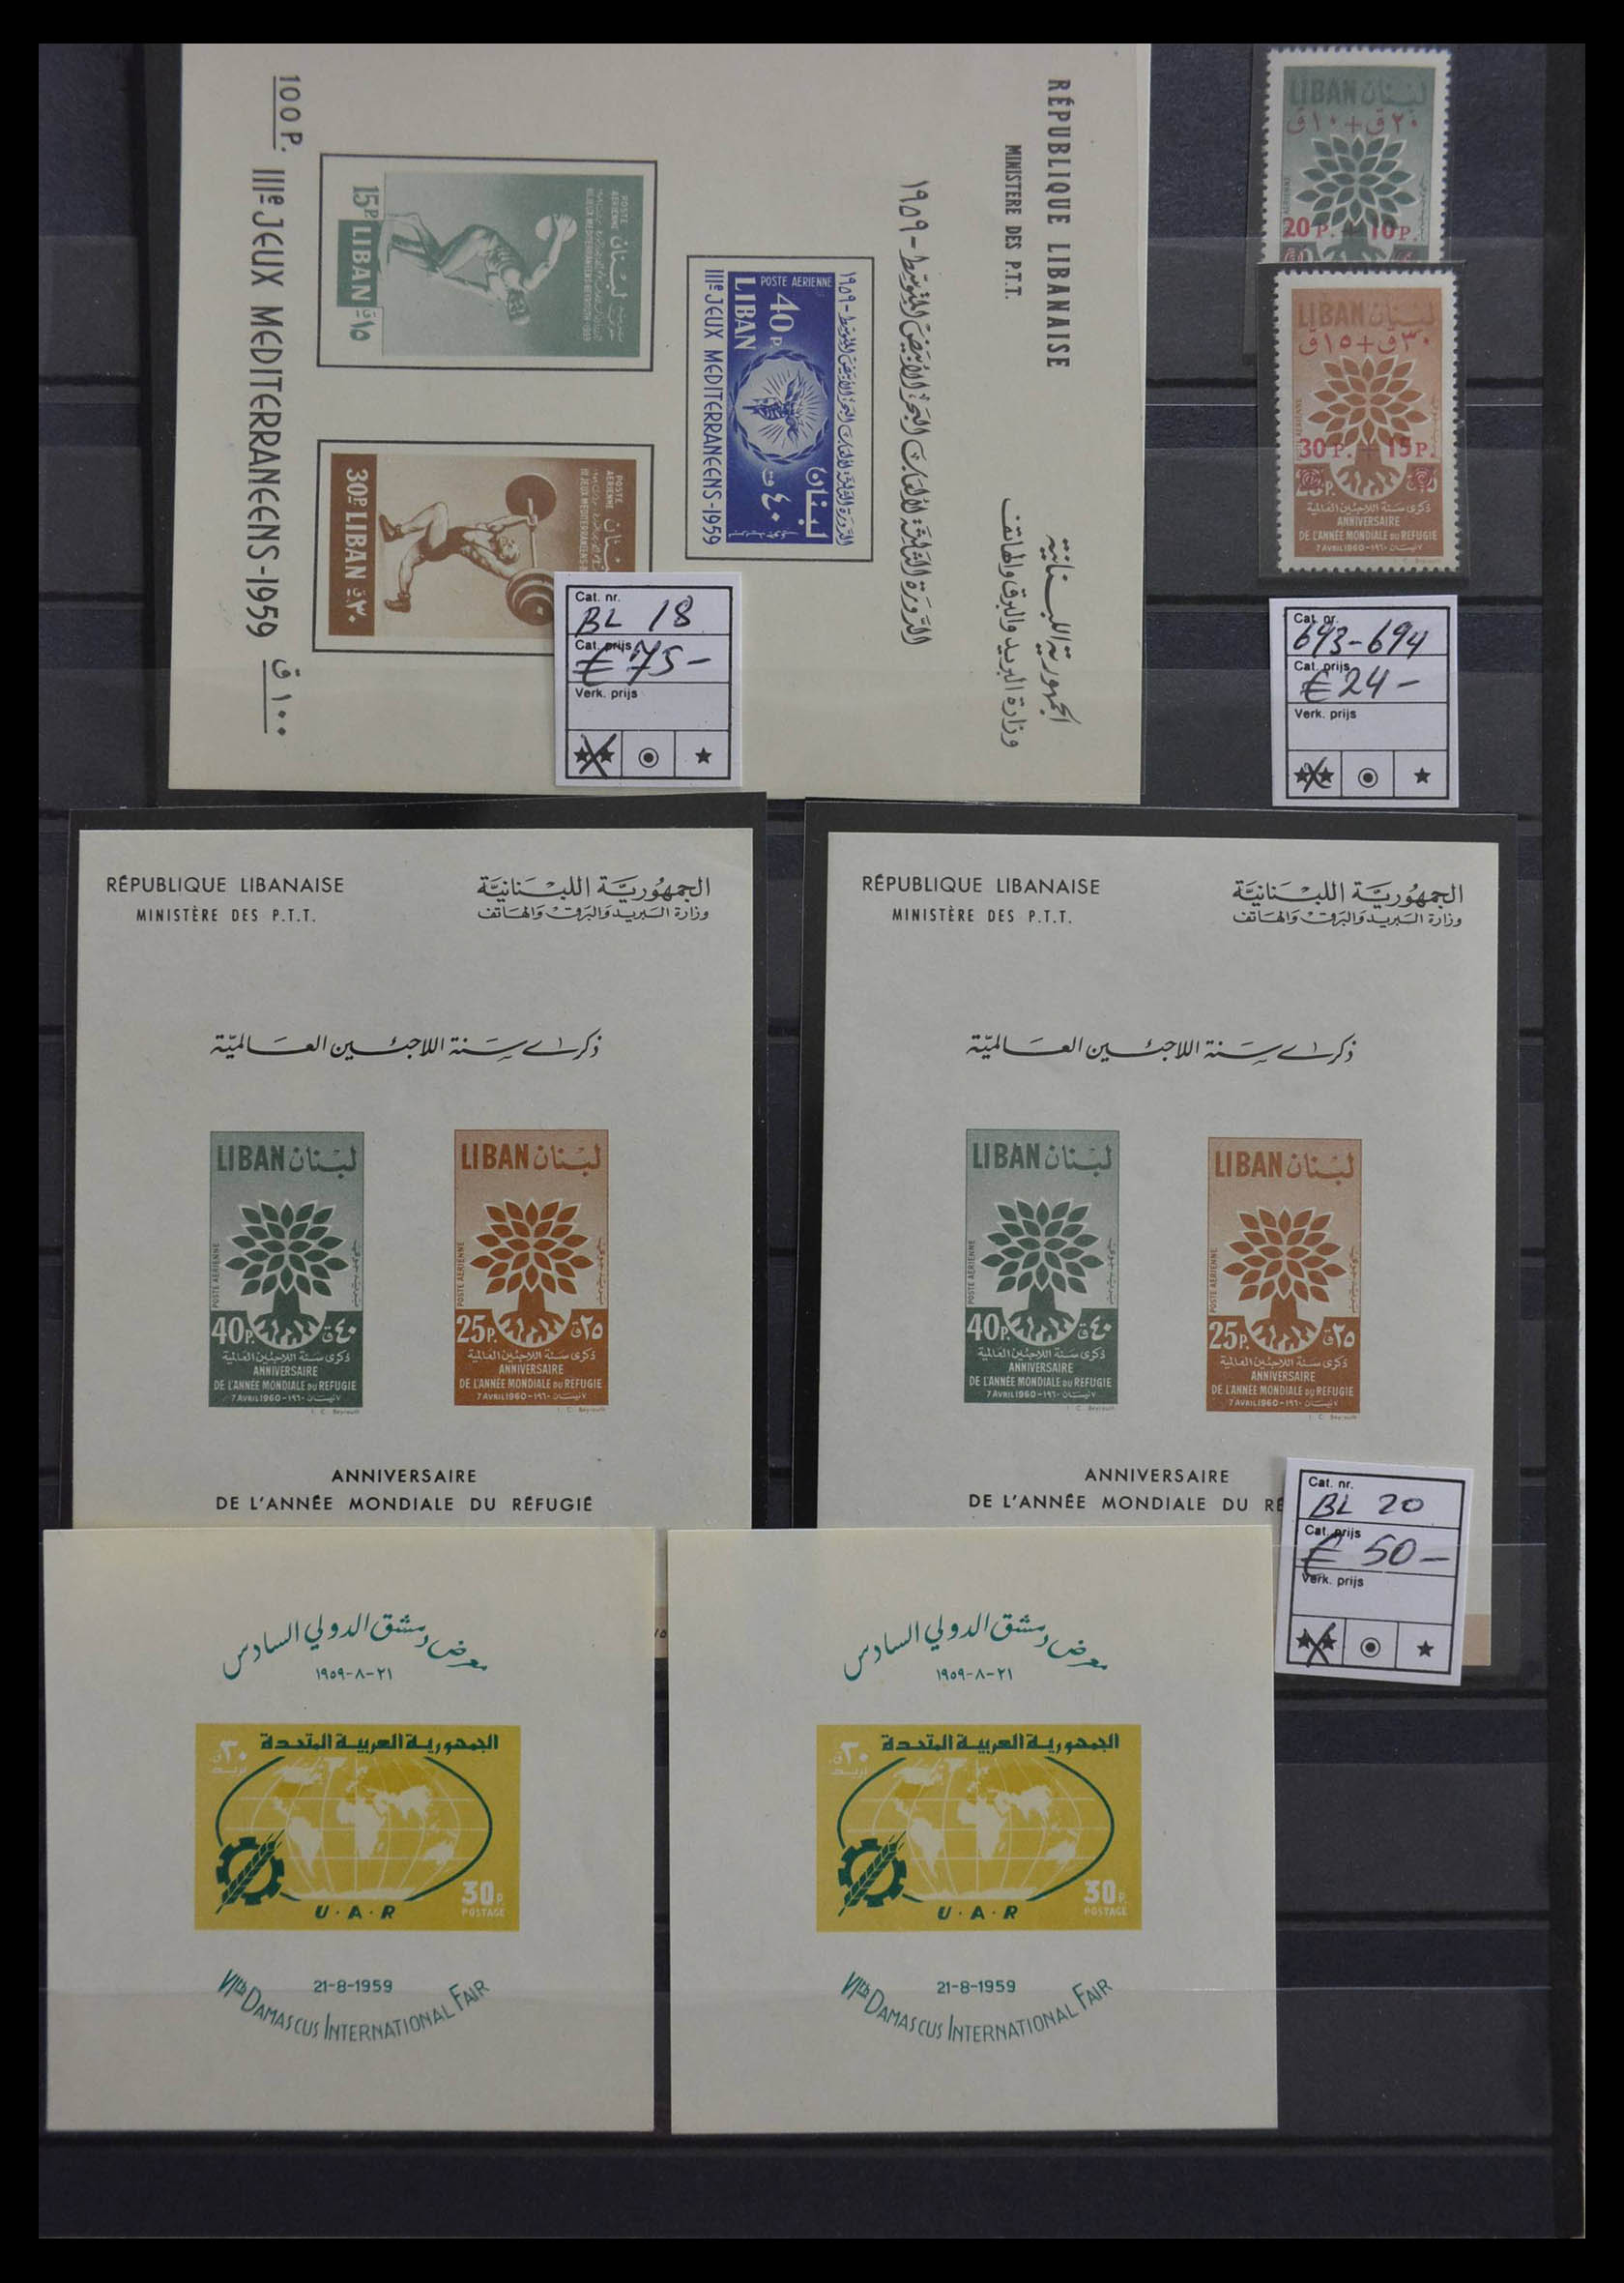 28511 001 - 28511 World souvenir sheets.